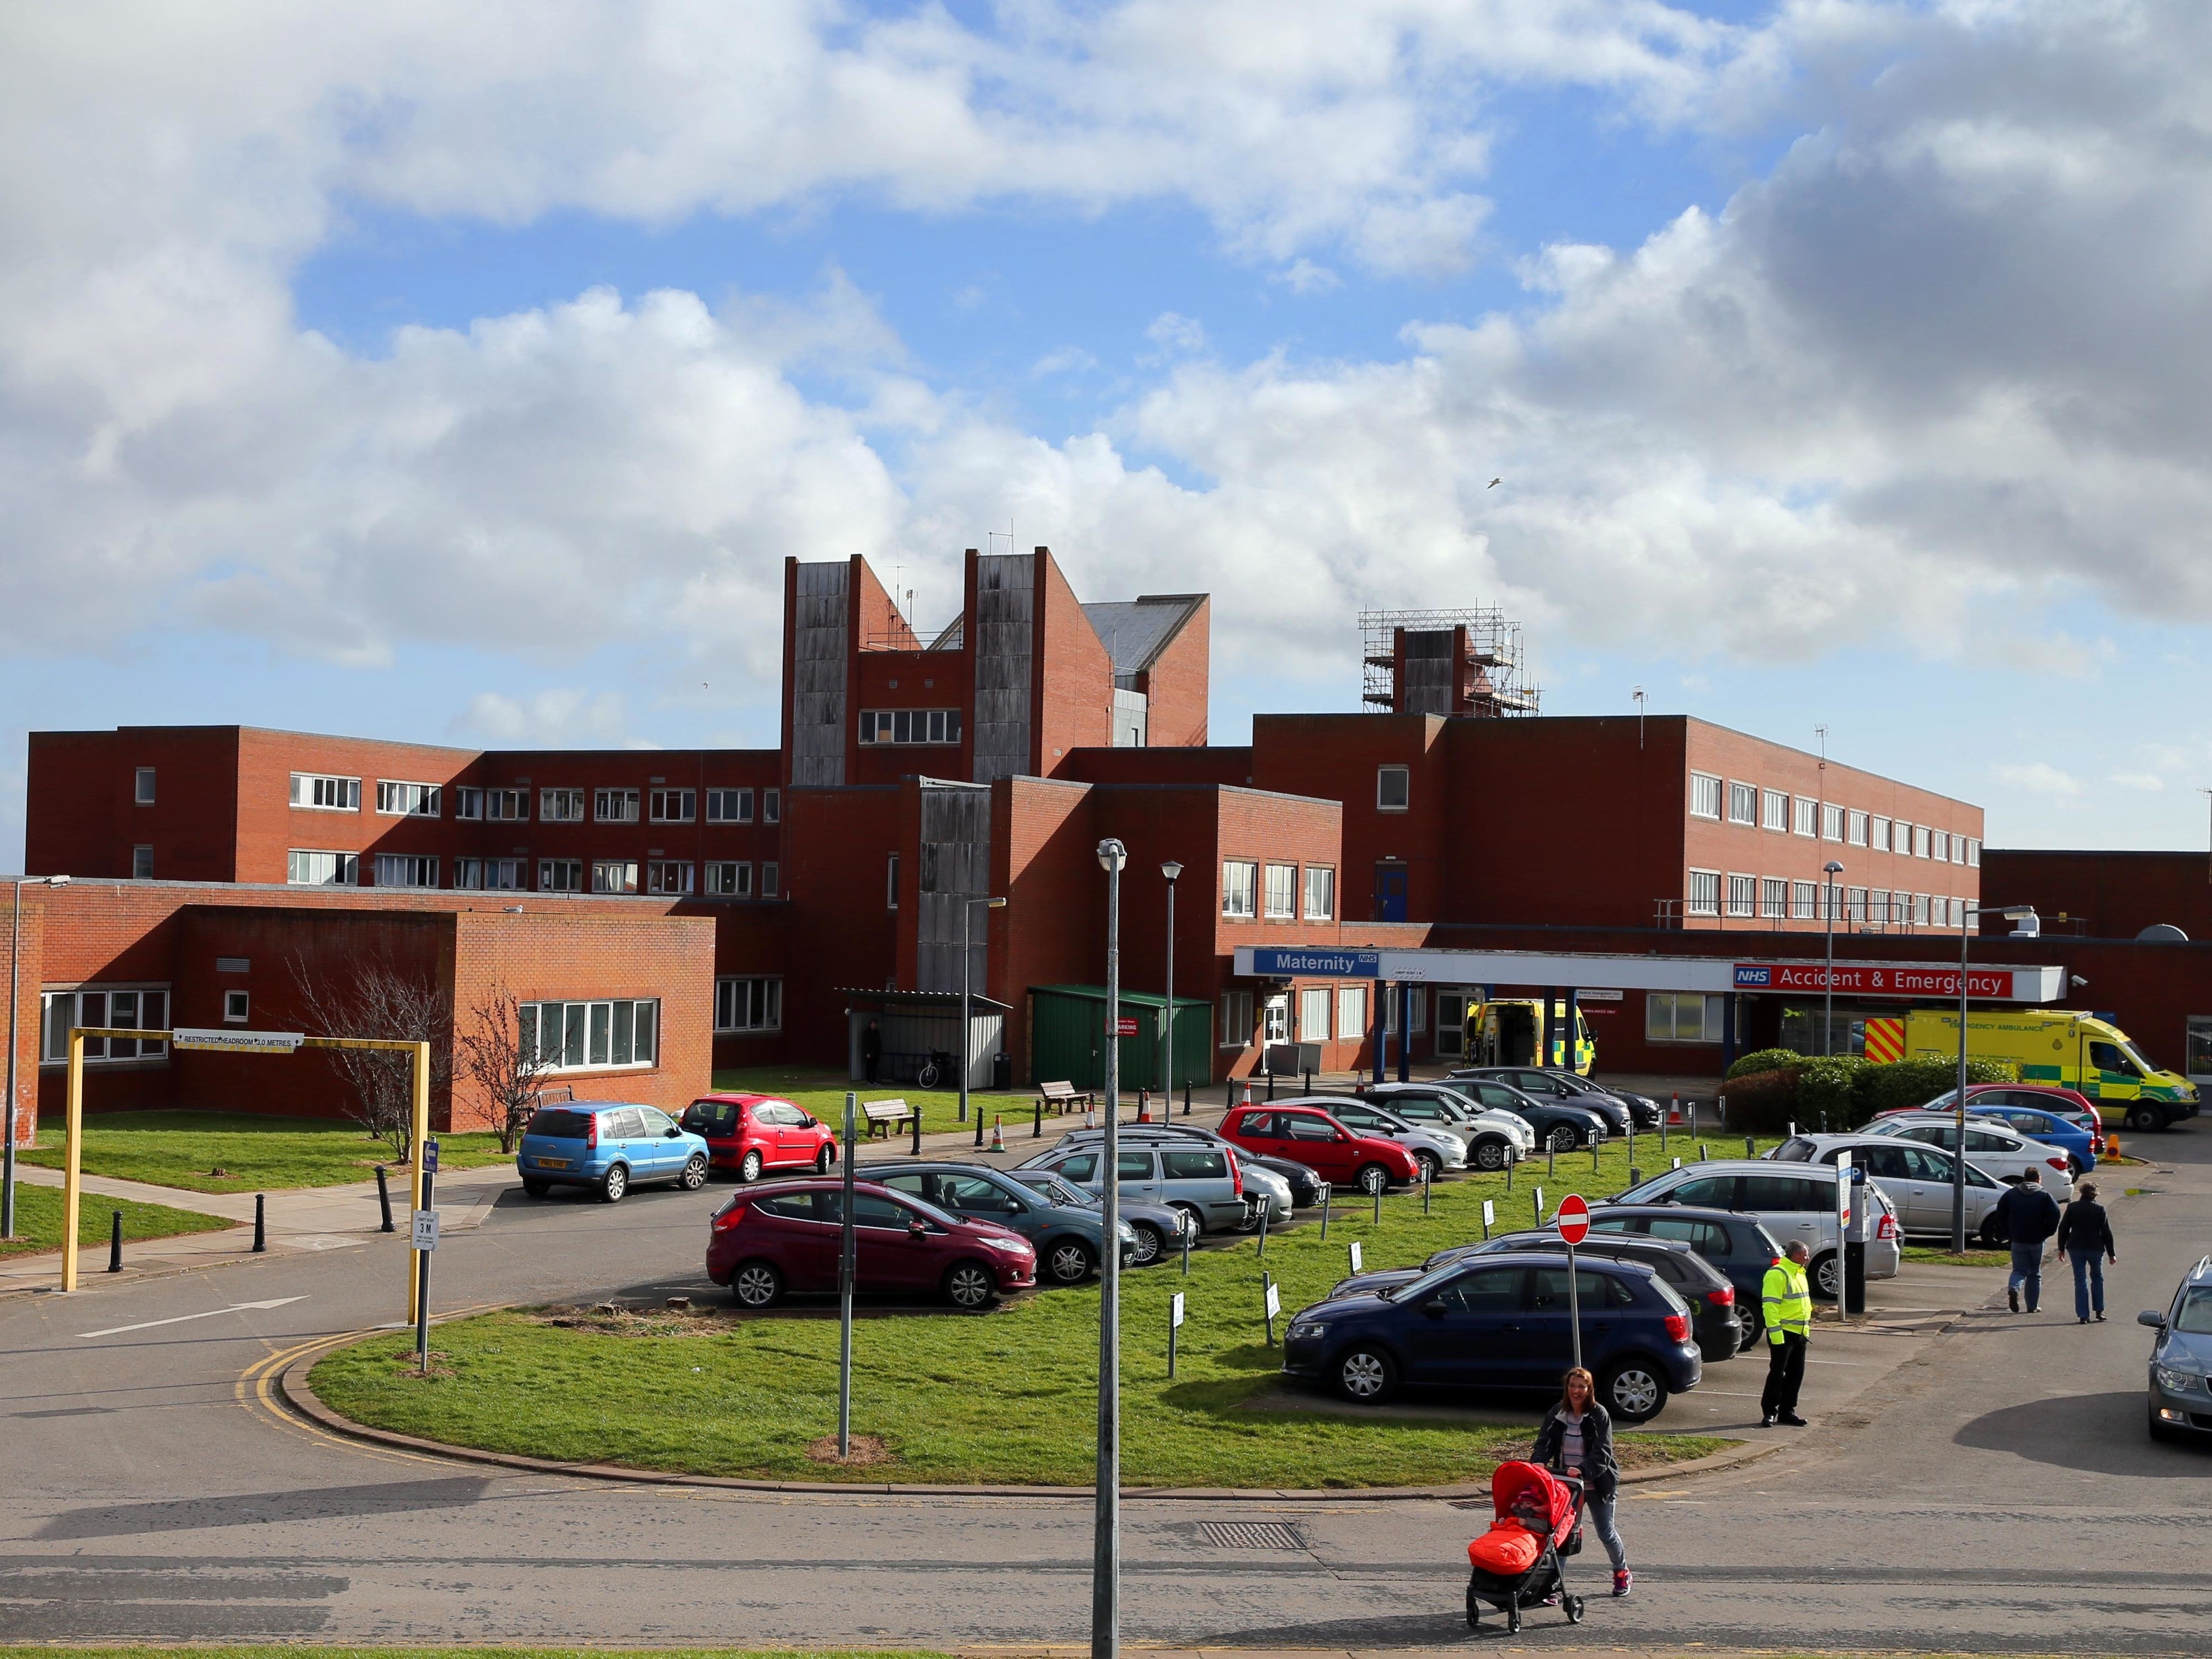 Furness Genera Hospital in Barrow, Cumbria